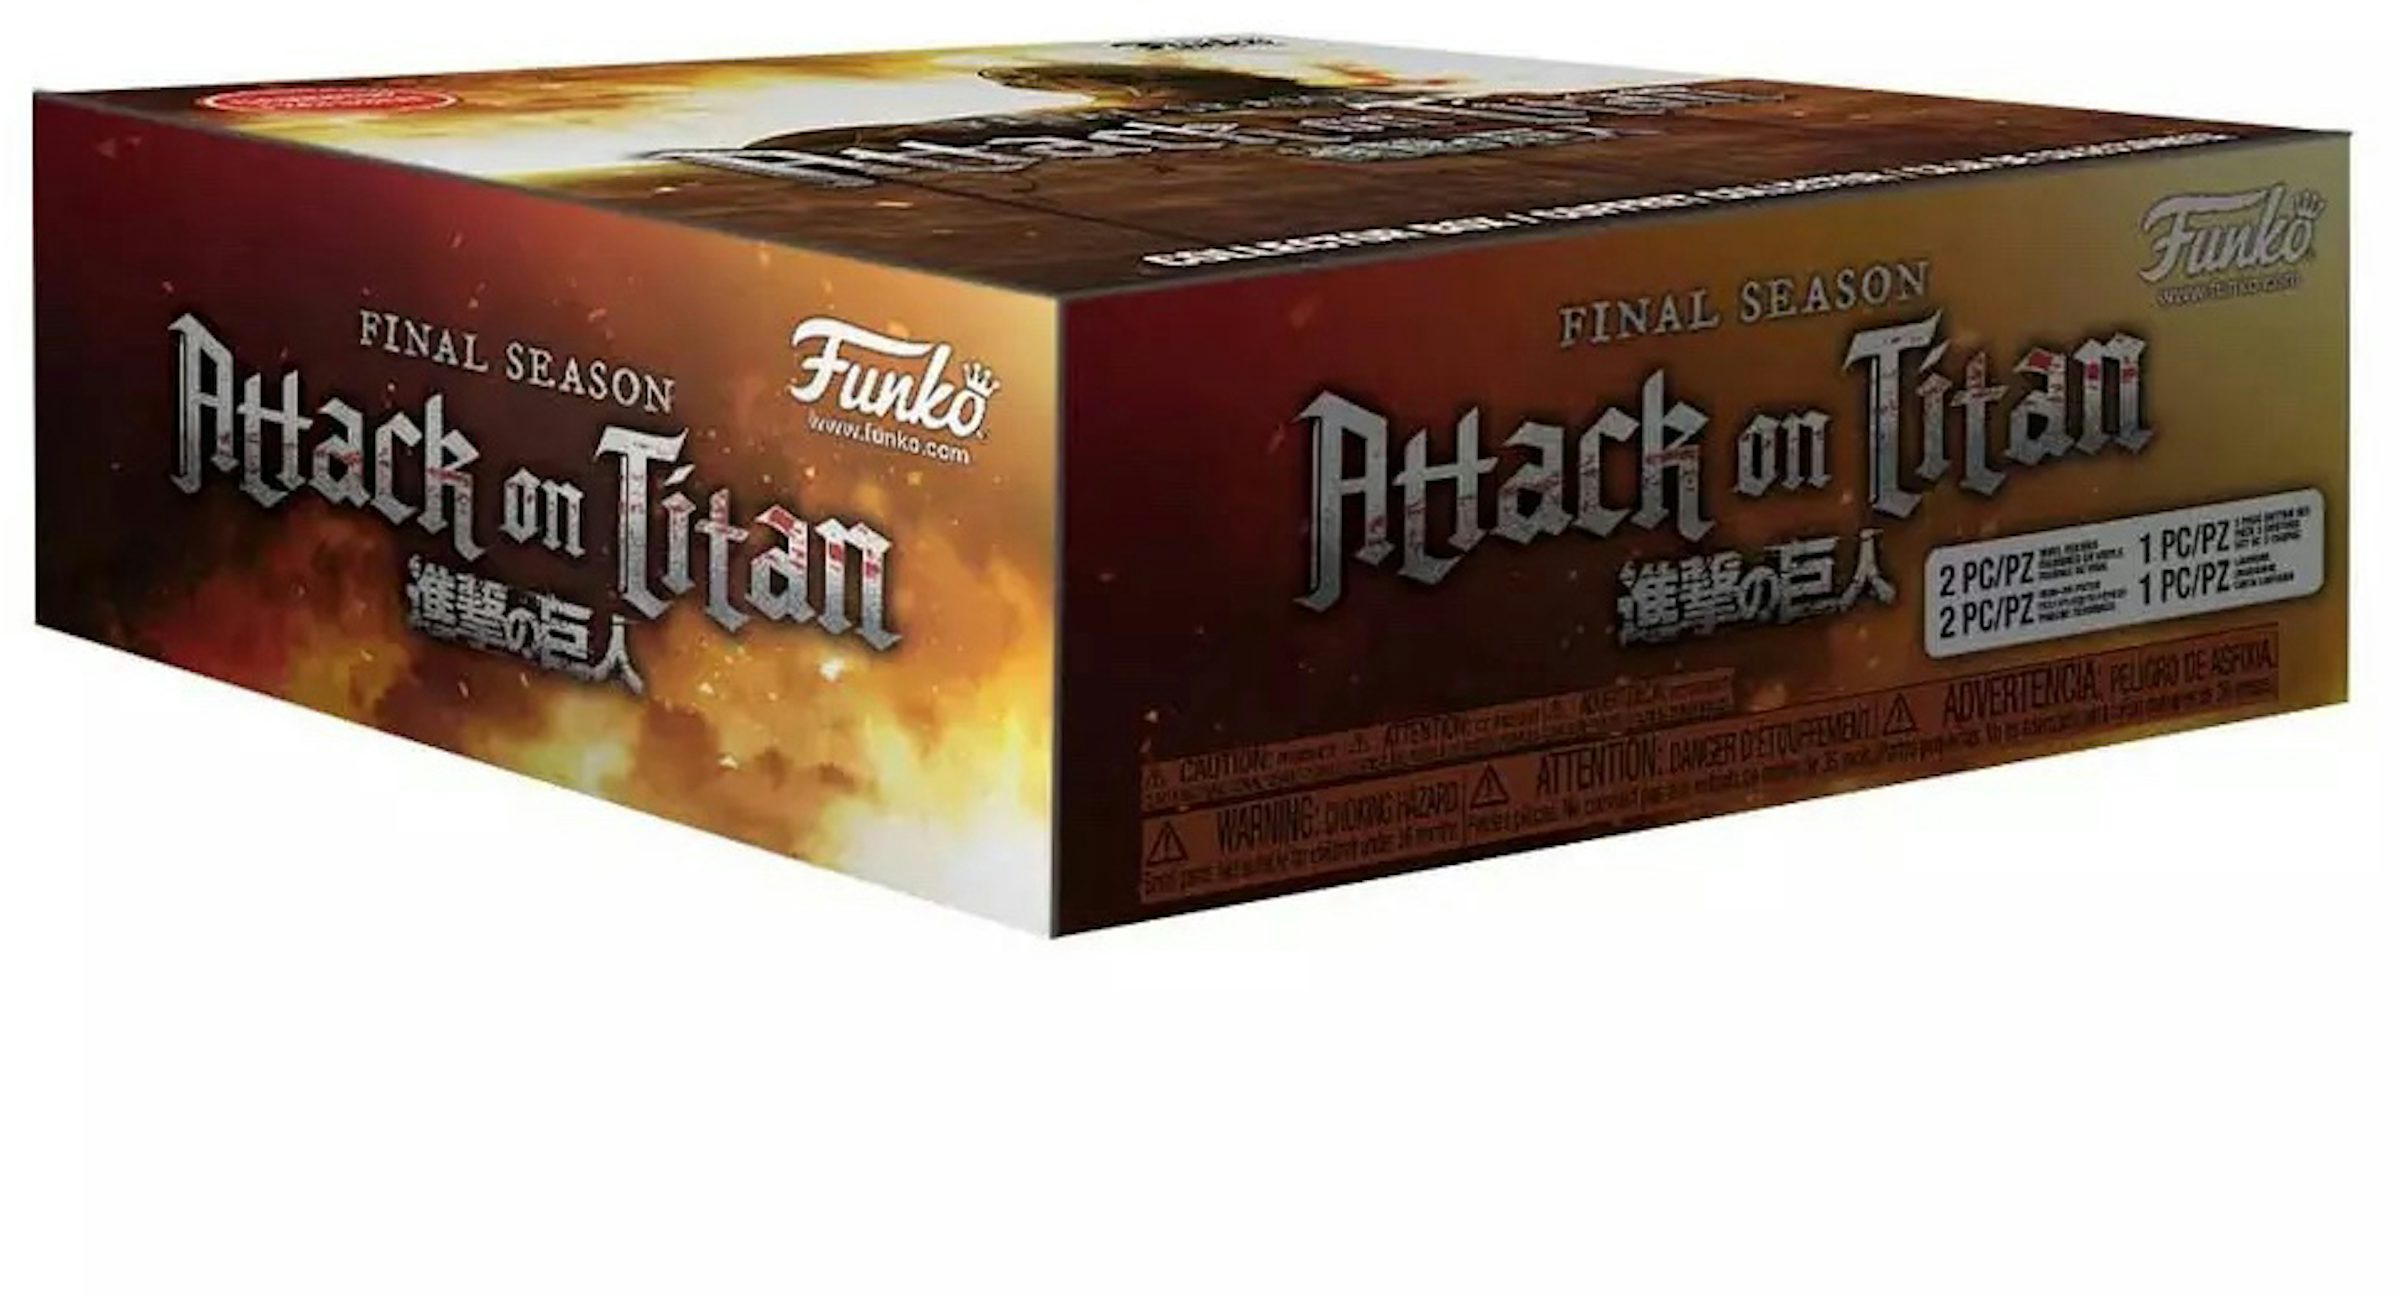 Attack on Titan Season 4 Key Art 2 Collector Print